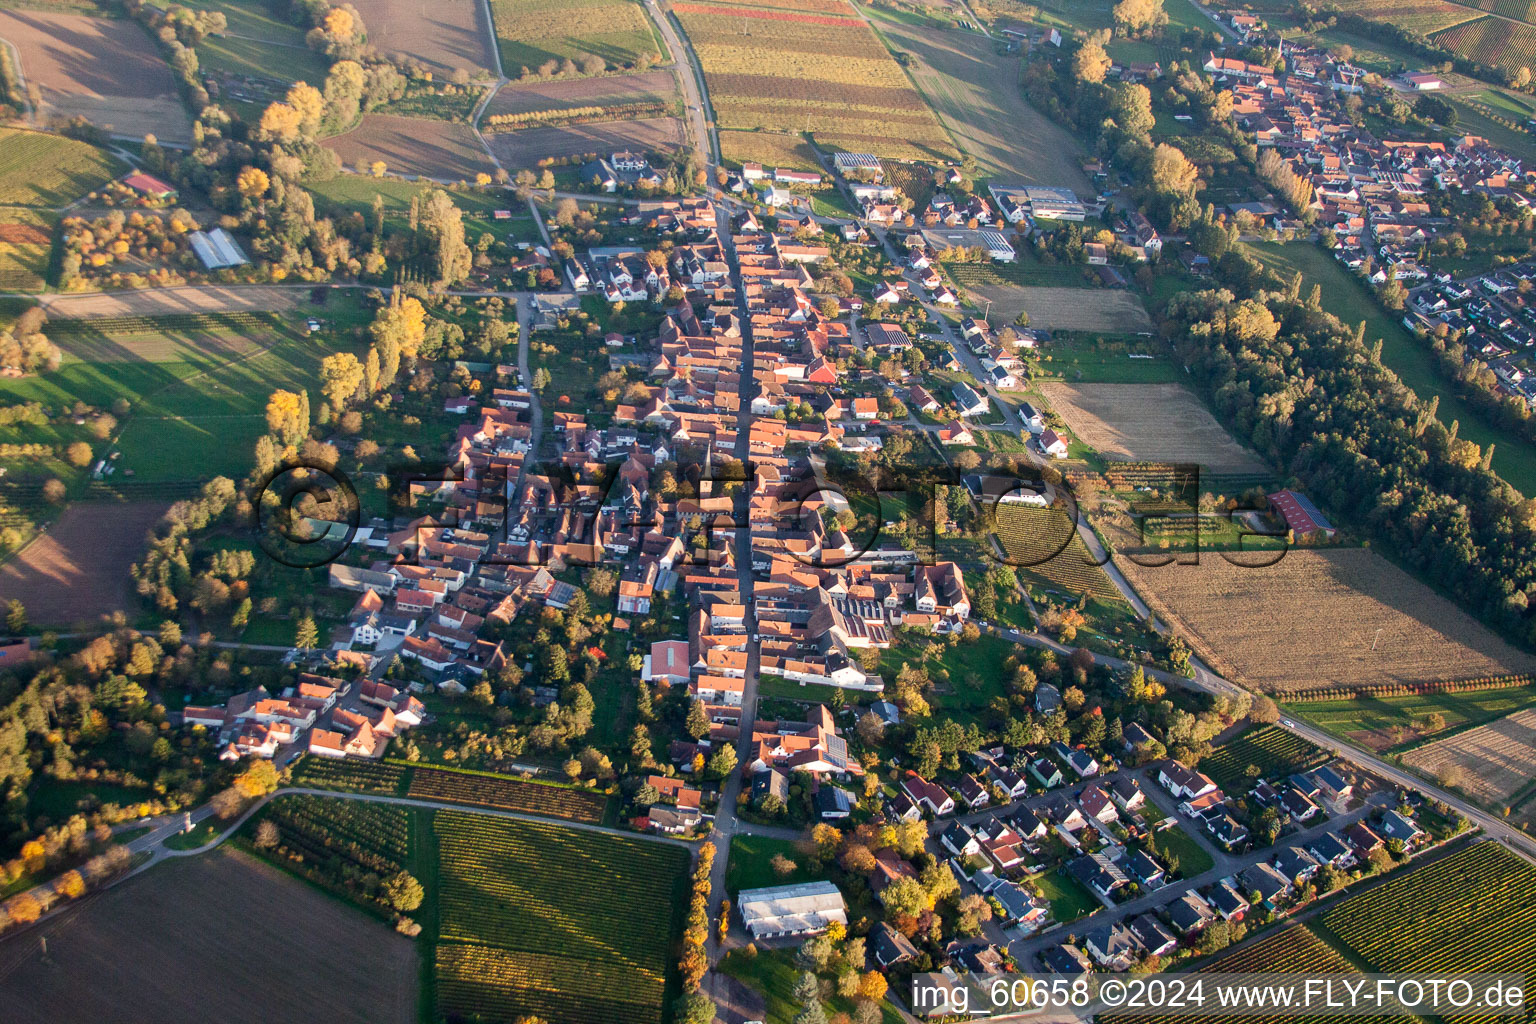 Aerial view of Village - view on the edge of agricultural fields and farmland in the district Heuchelheim in Heuchelheim-Klingen in the state Rhineland-Palatinate, Germany